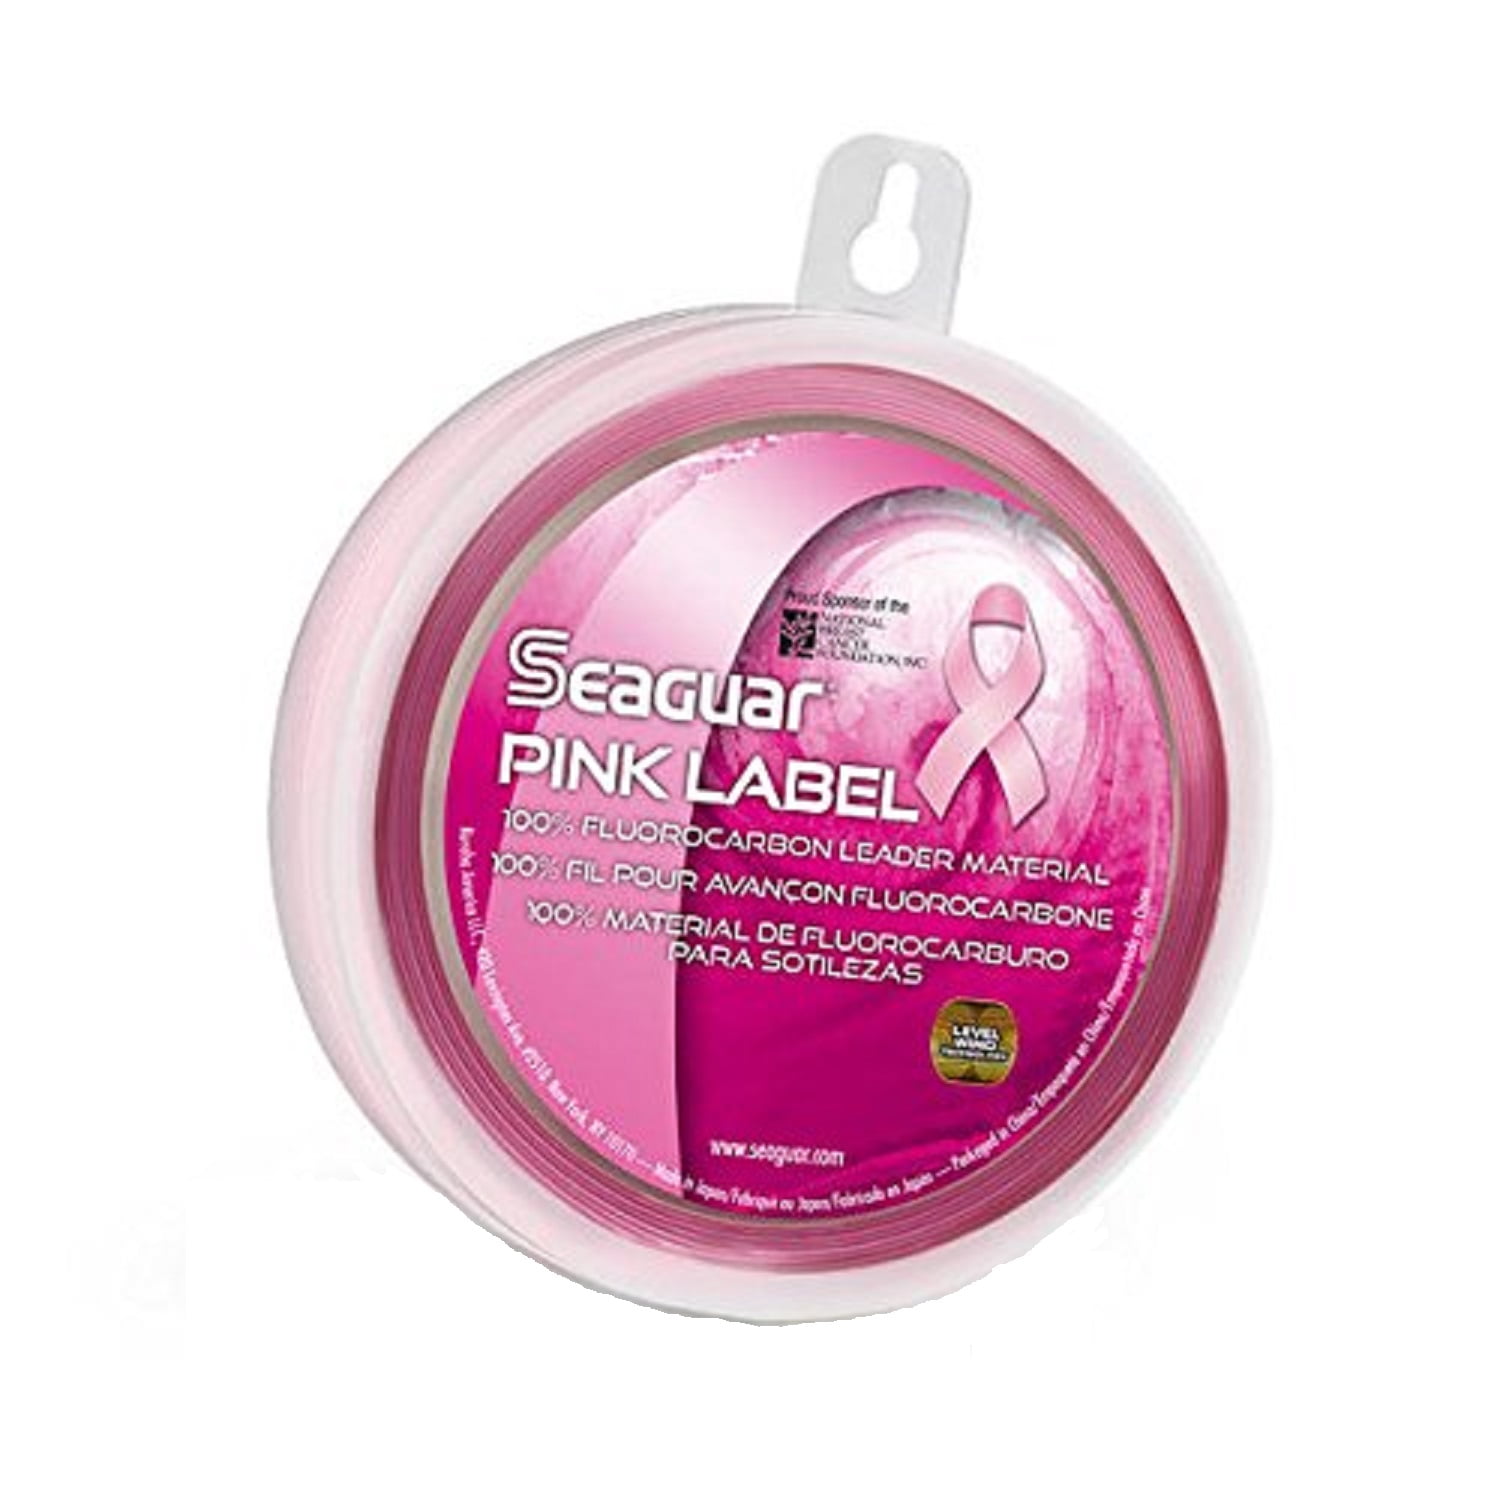 Seaguar Pink Label 100% Fluorocarbon Fishing Line 200lbs, 25yds